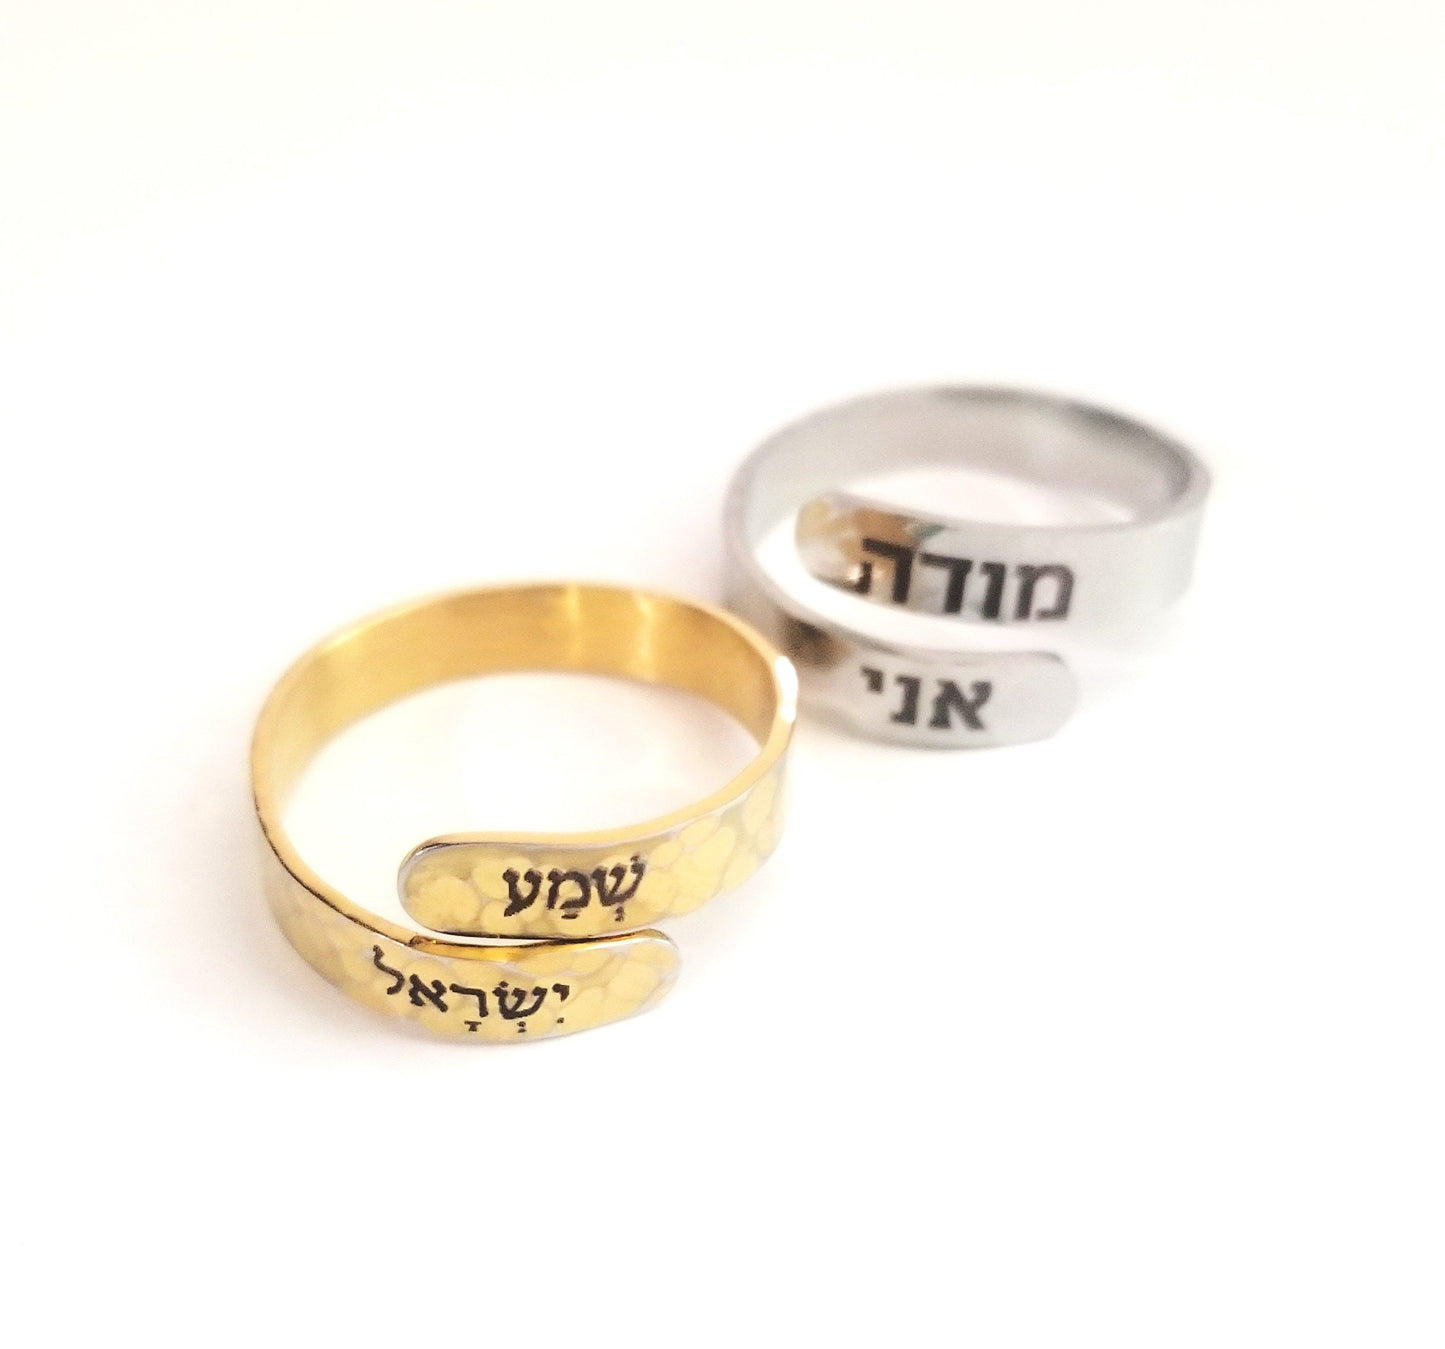 Modeh Ani Jewish prayer Hebrew ring, Thankful Judaica jewelry gift, Biblical verse blessing ring, Thin wraparound silver adjustable ring